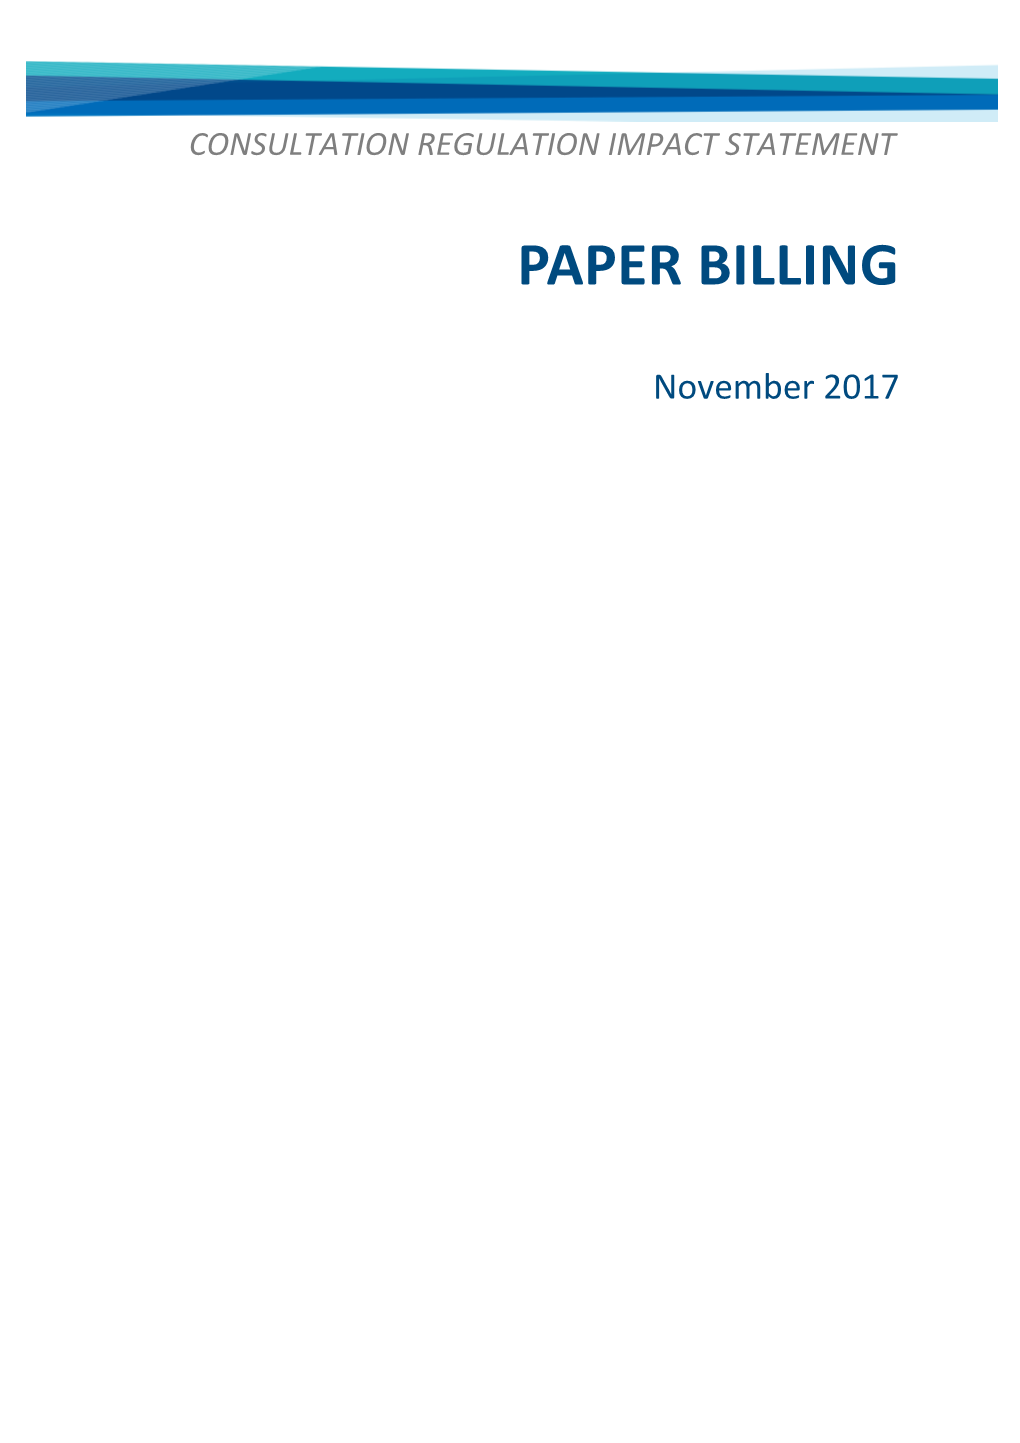 Paper Billing Consultation RIS